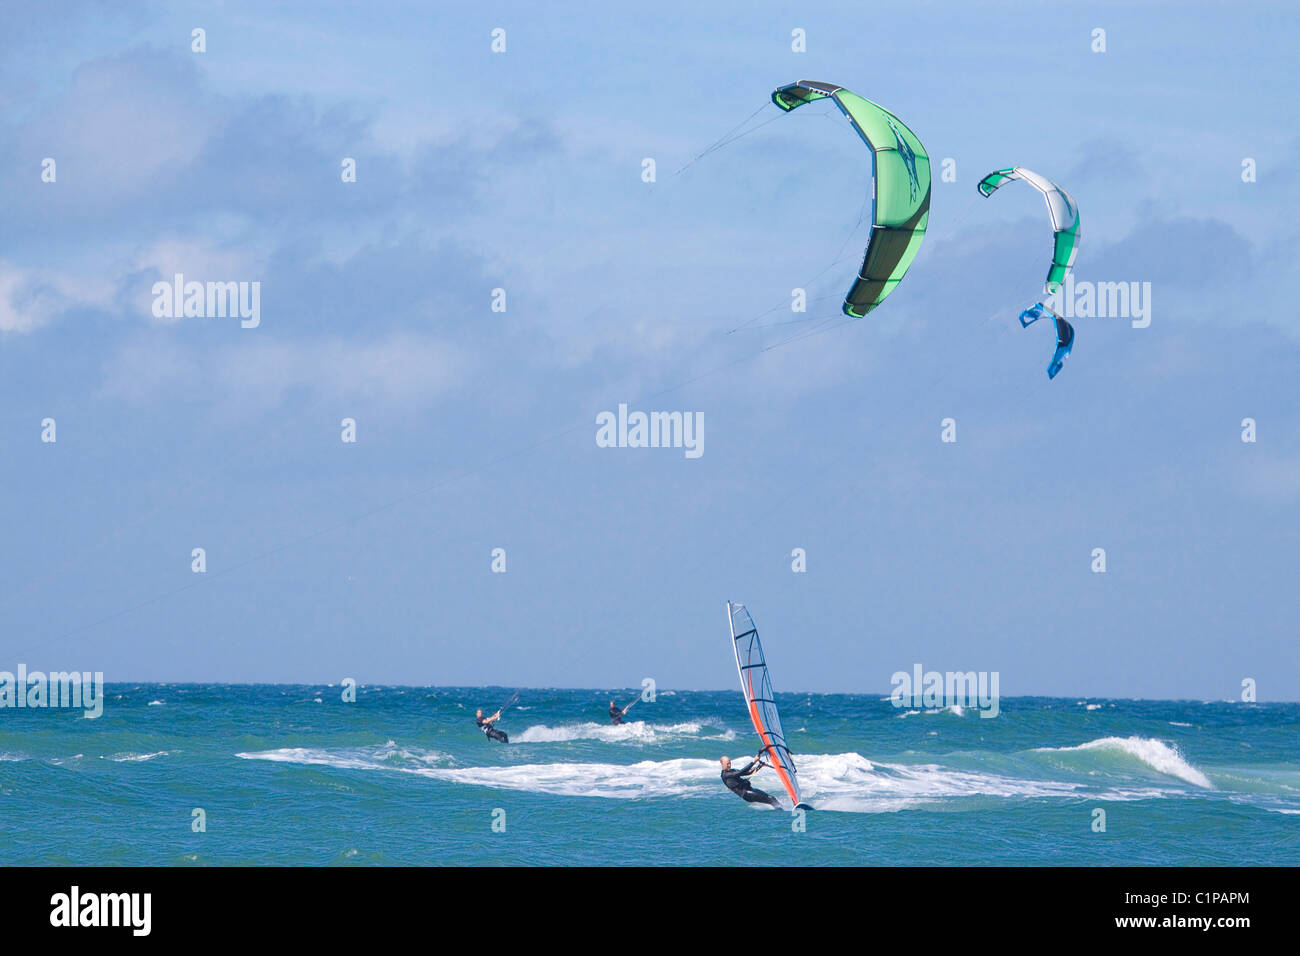 Germany, Sylt, windsurfing and kiteboarding at sea Stock Photo